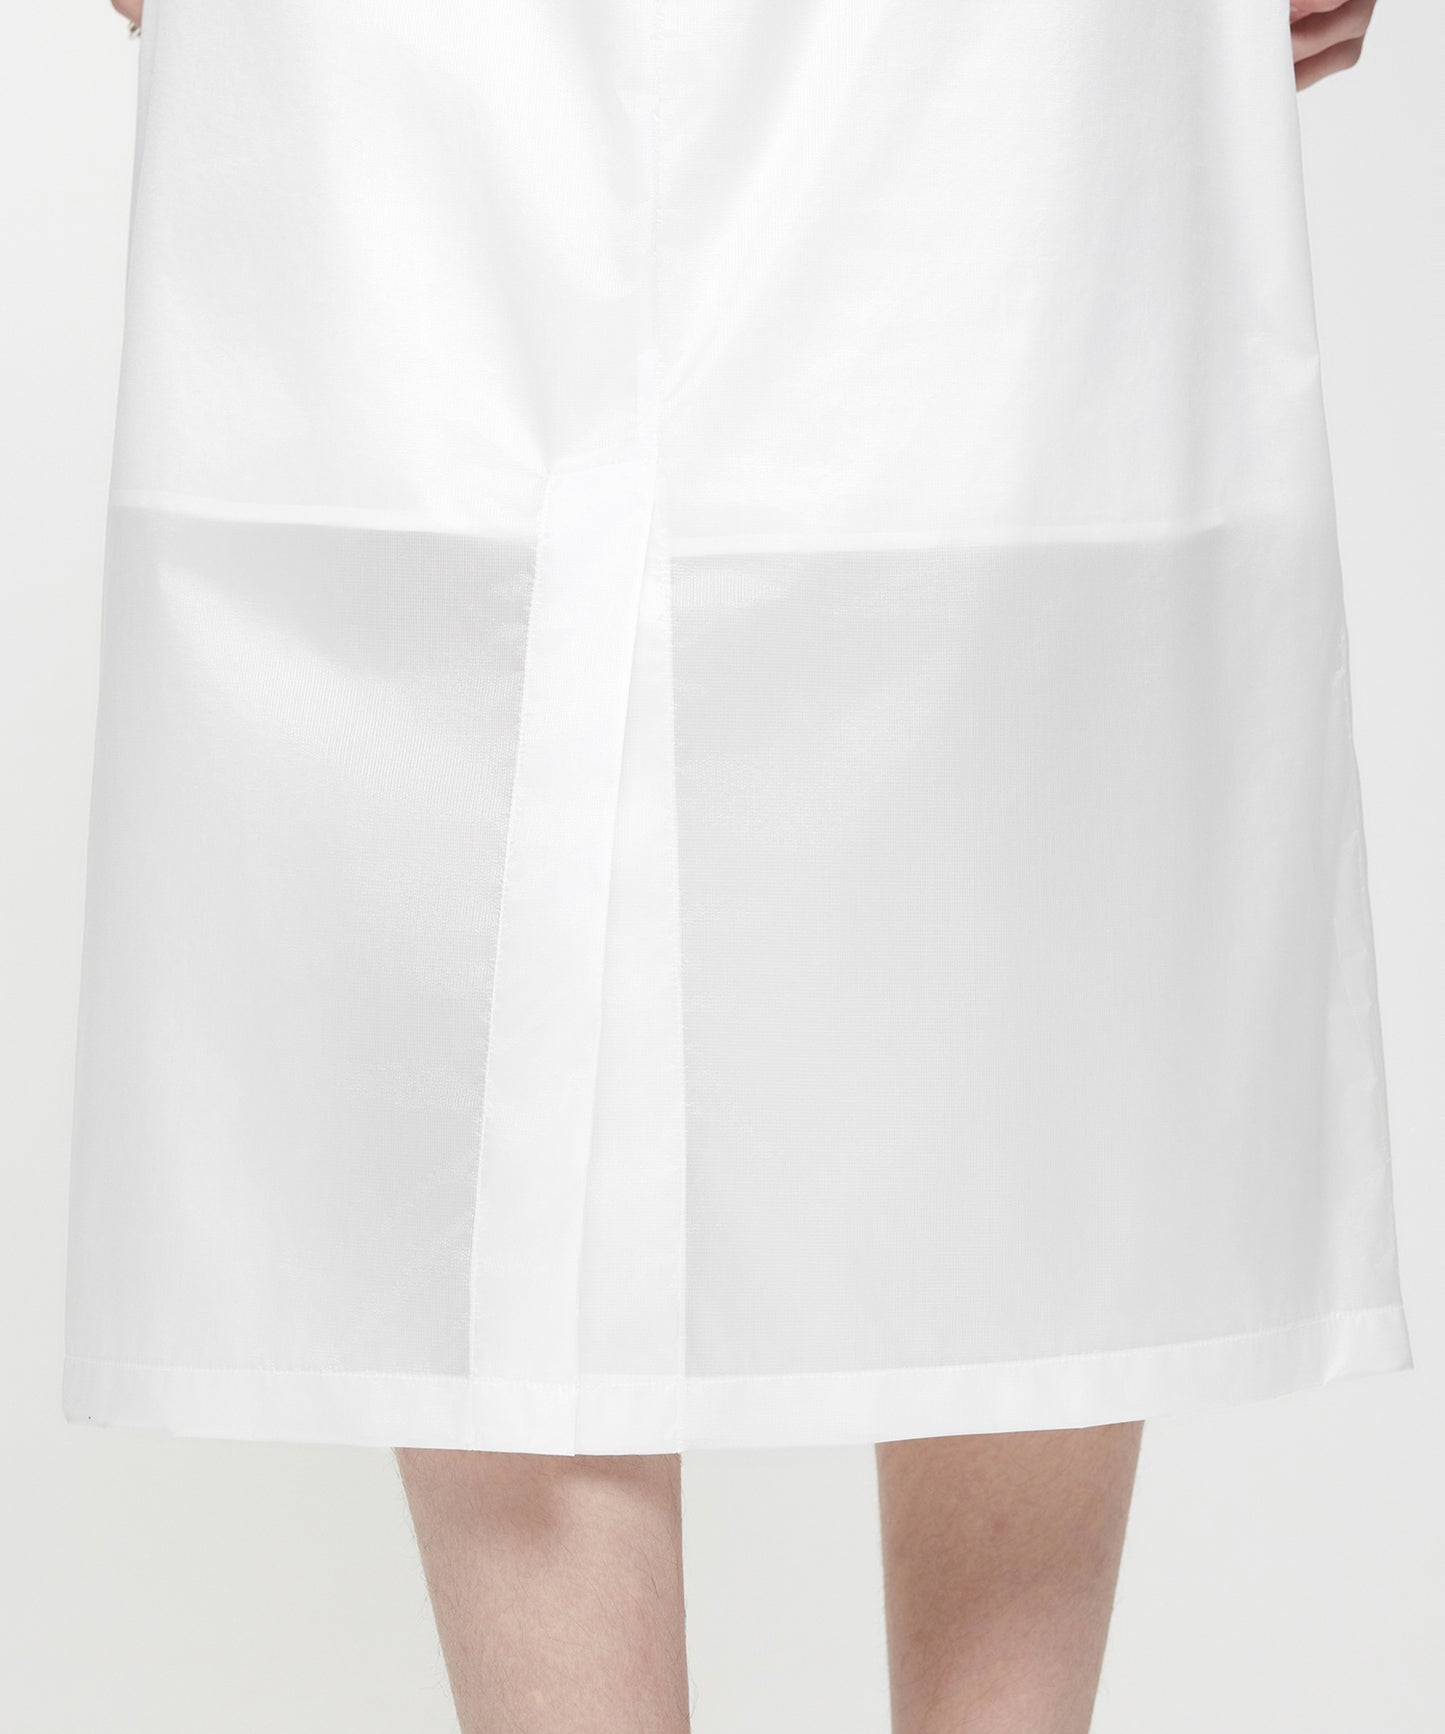 Ultra-thin Breathable Skirt